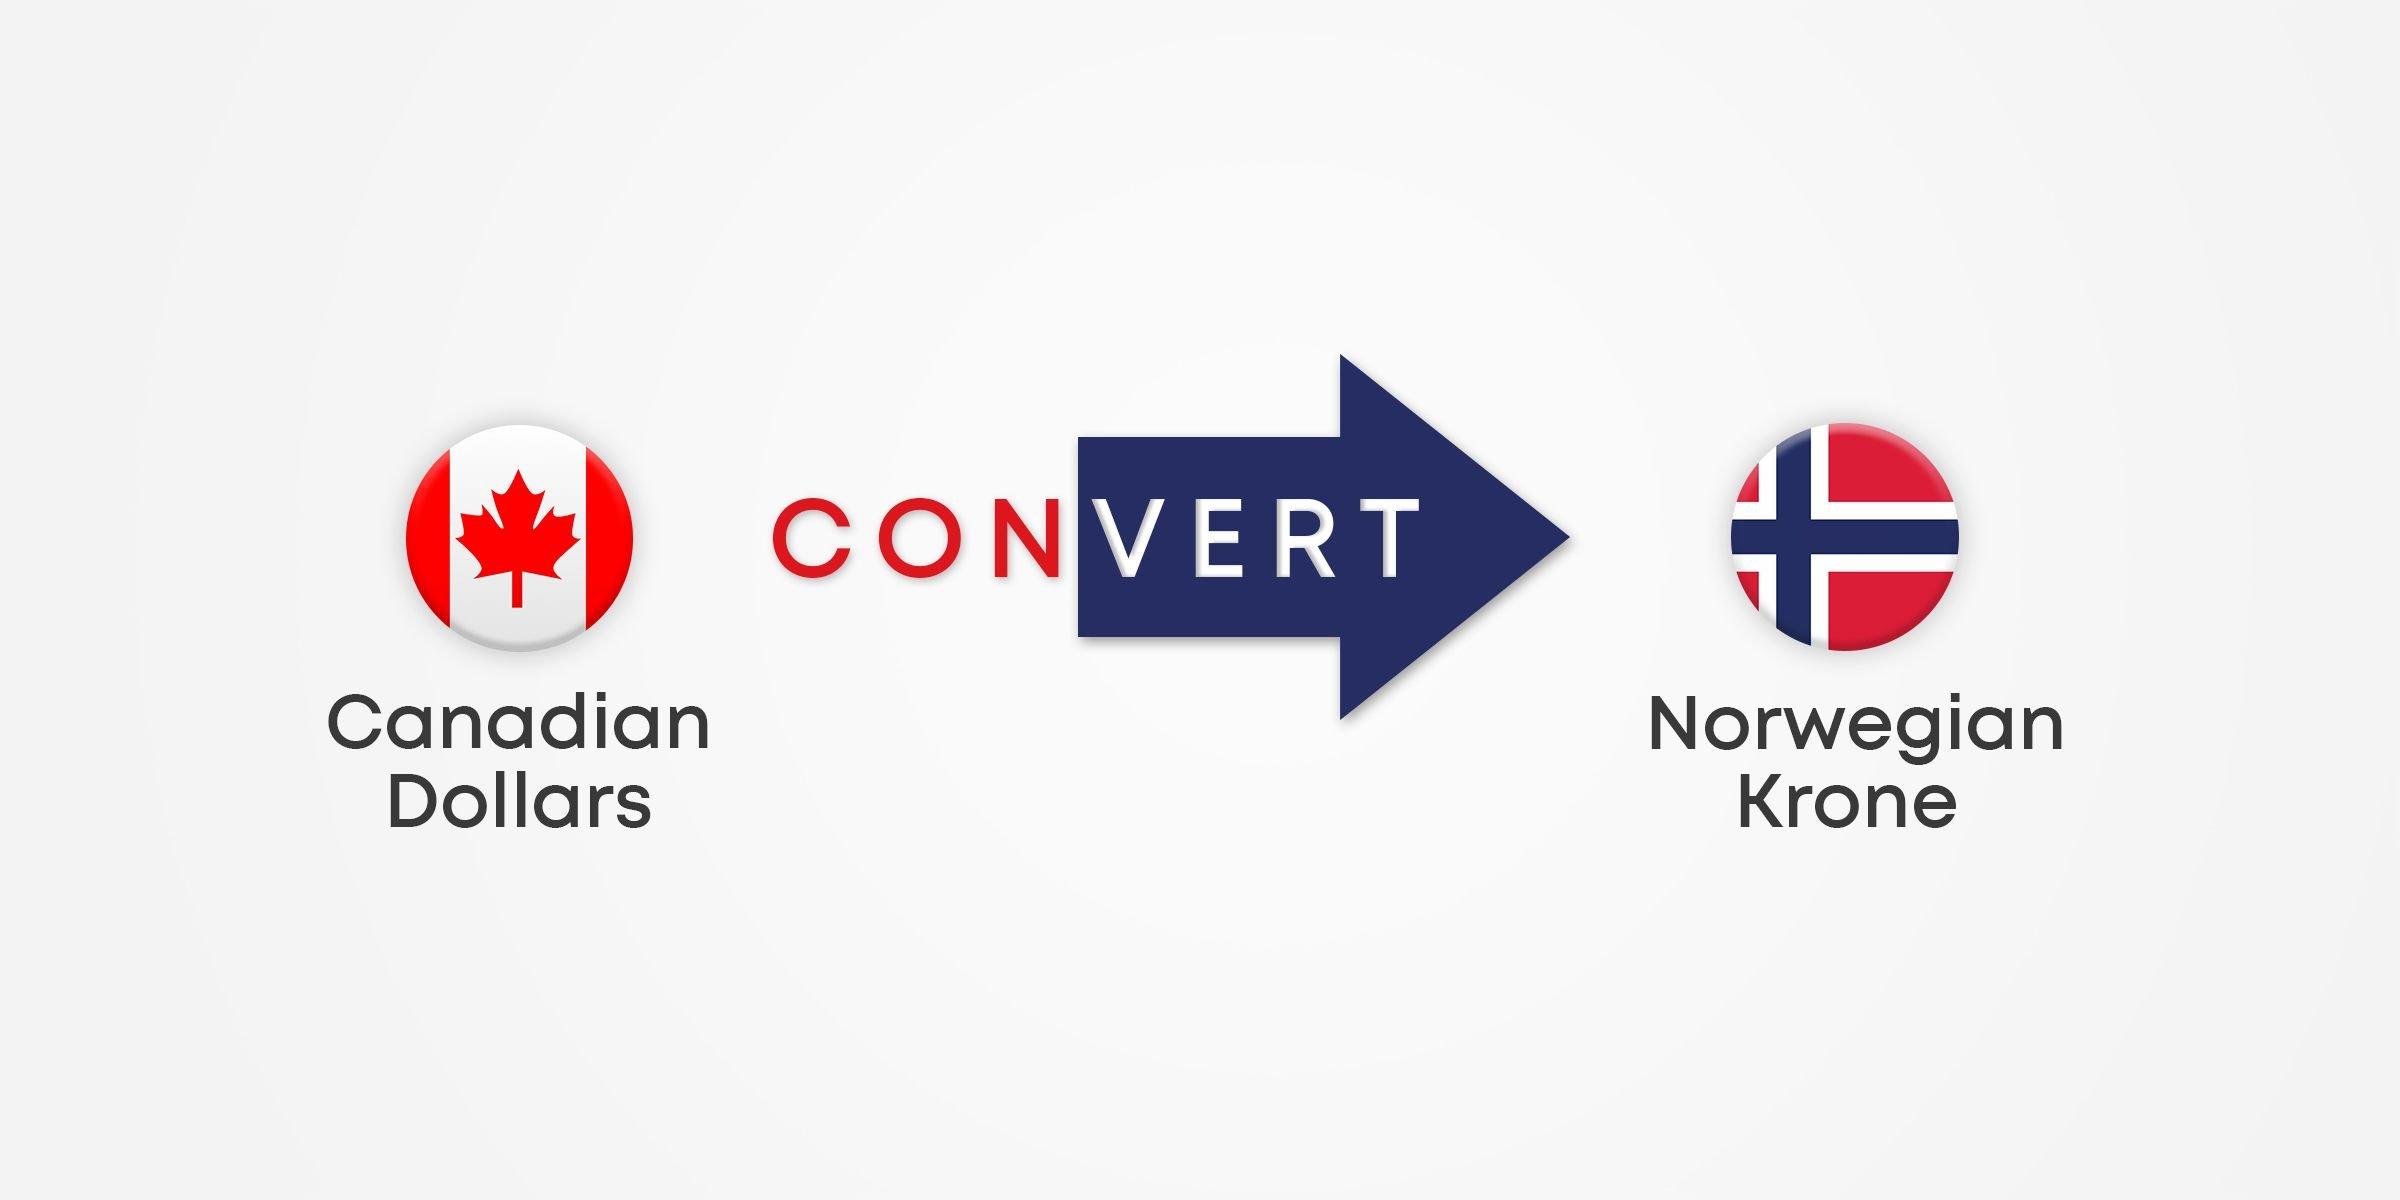 How to Convert Canadian Dollars to Norwegian Krone?